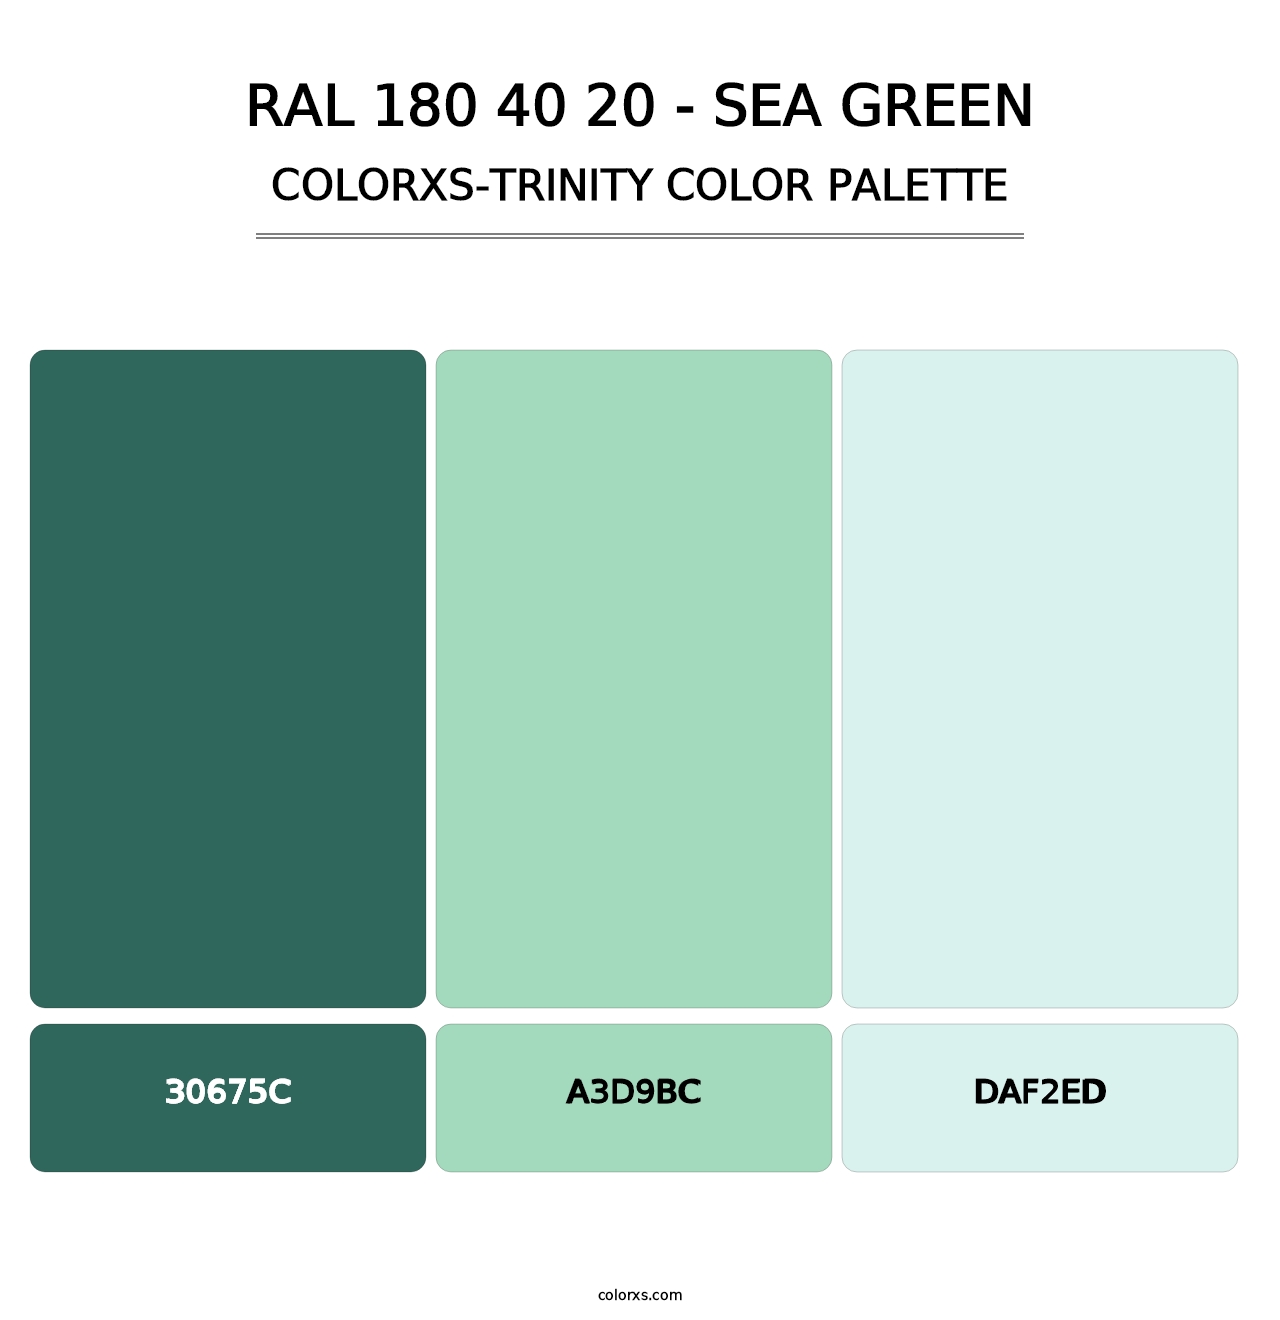 RAL 180 40 20 - Sea Green - Colorxs Trinity Palette